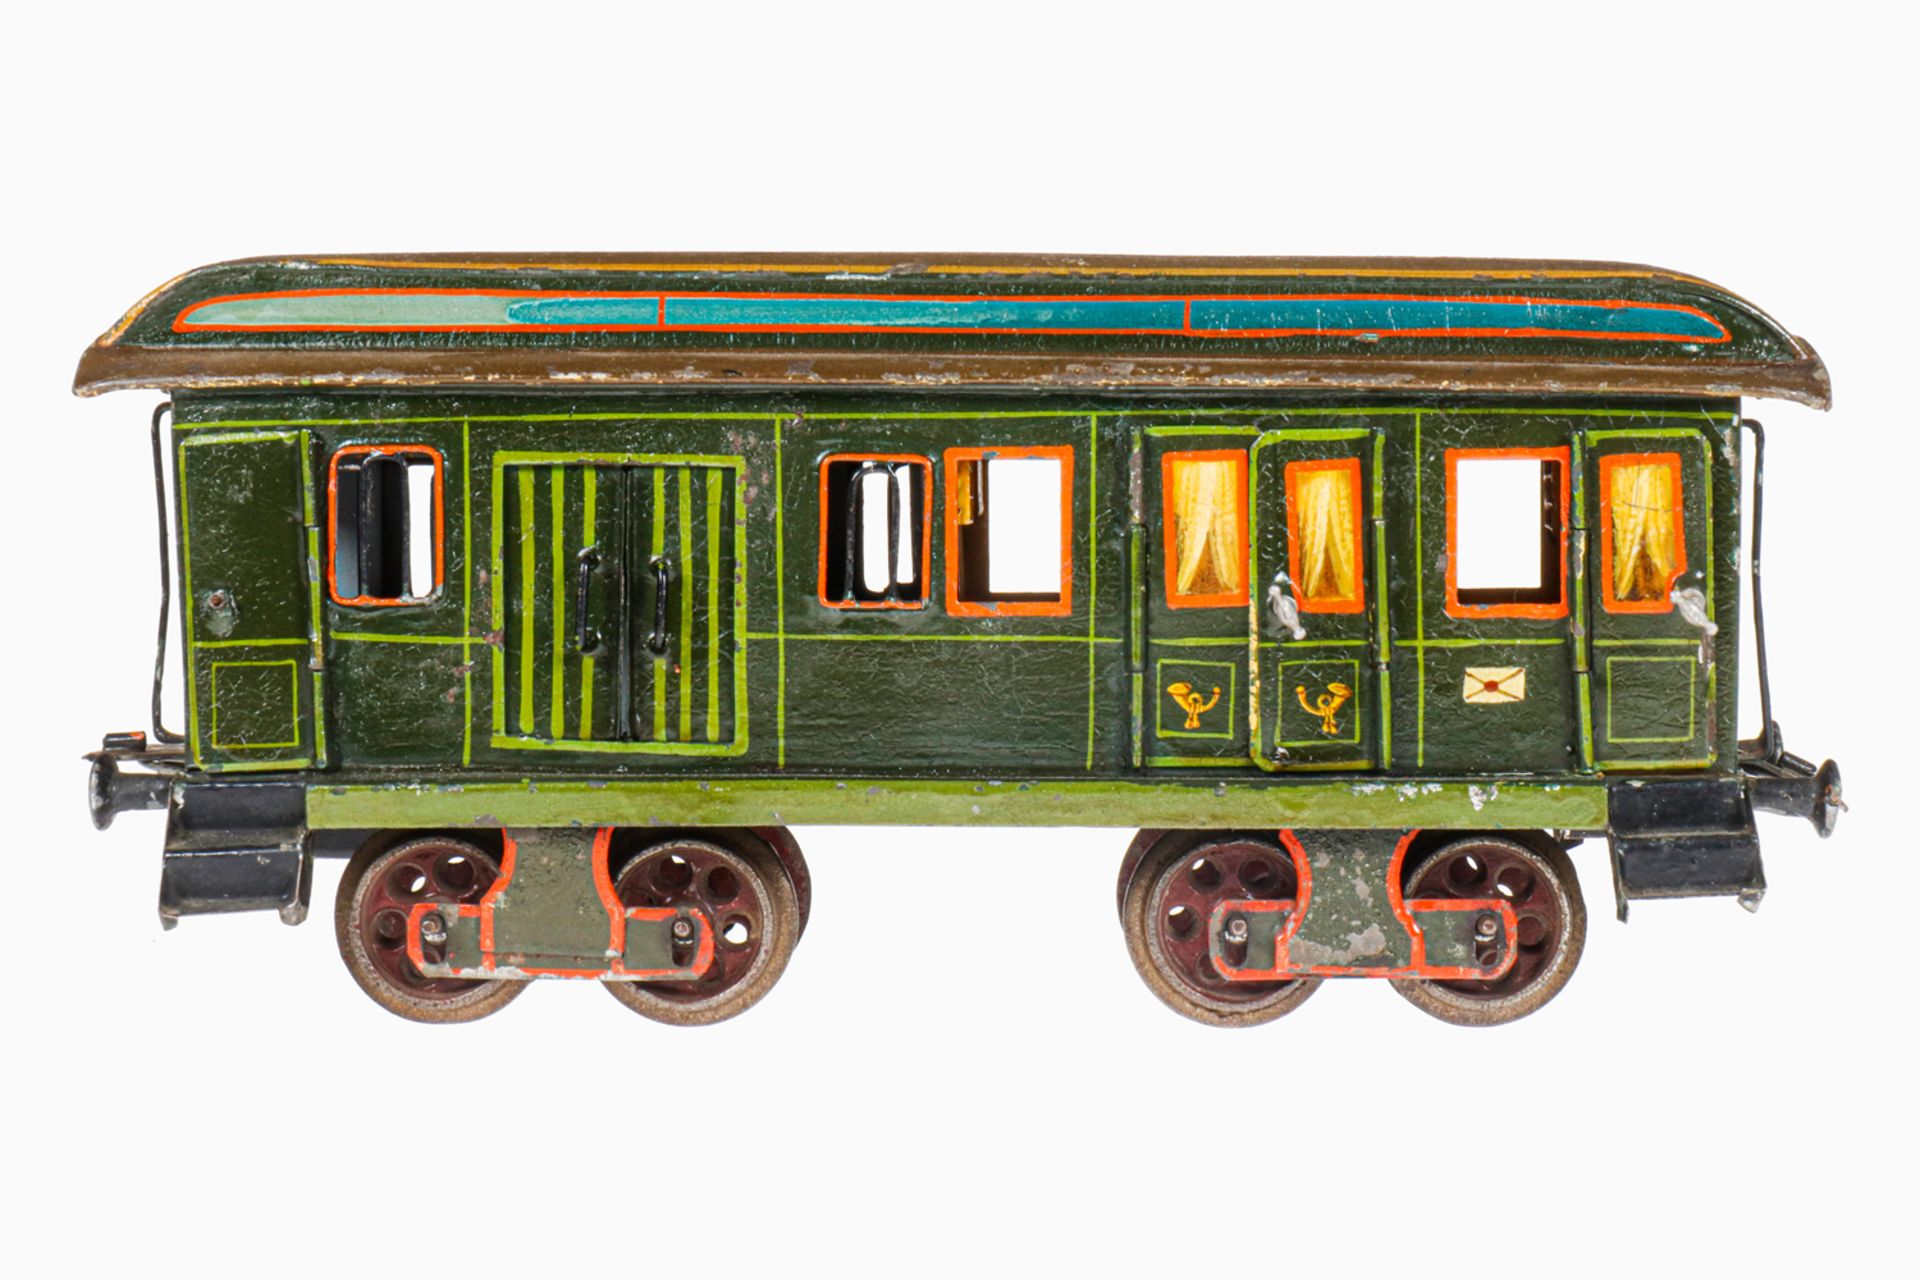 Märklin Post-/Gepäckwagen 1844, S 1, uralt, grün HL, Oberlichtdach ohne Lüfter, glatte